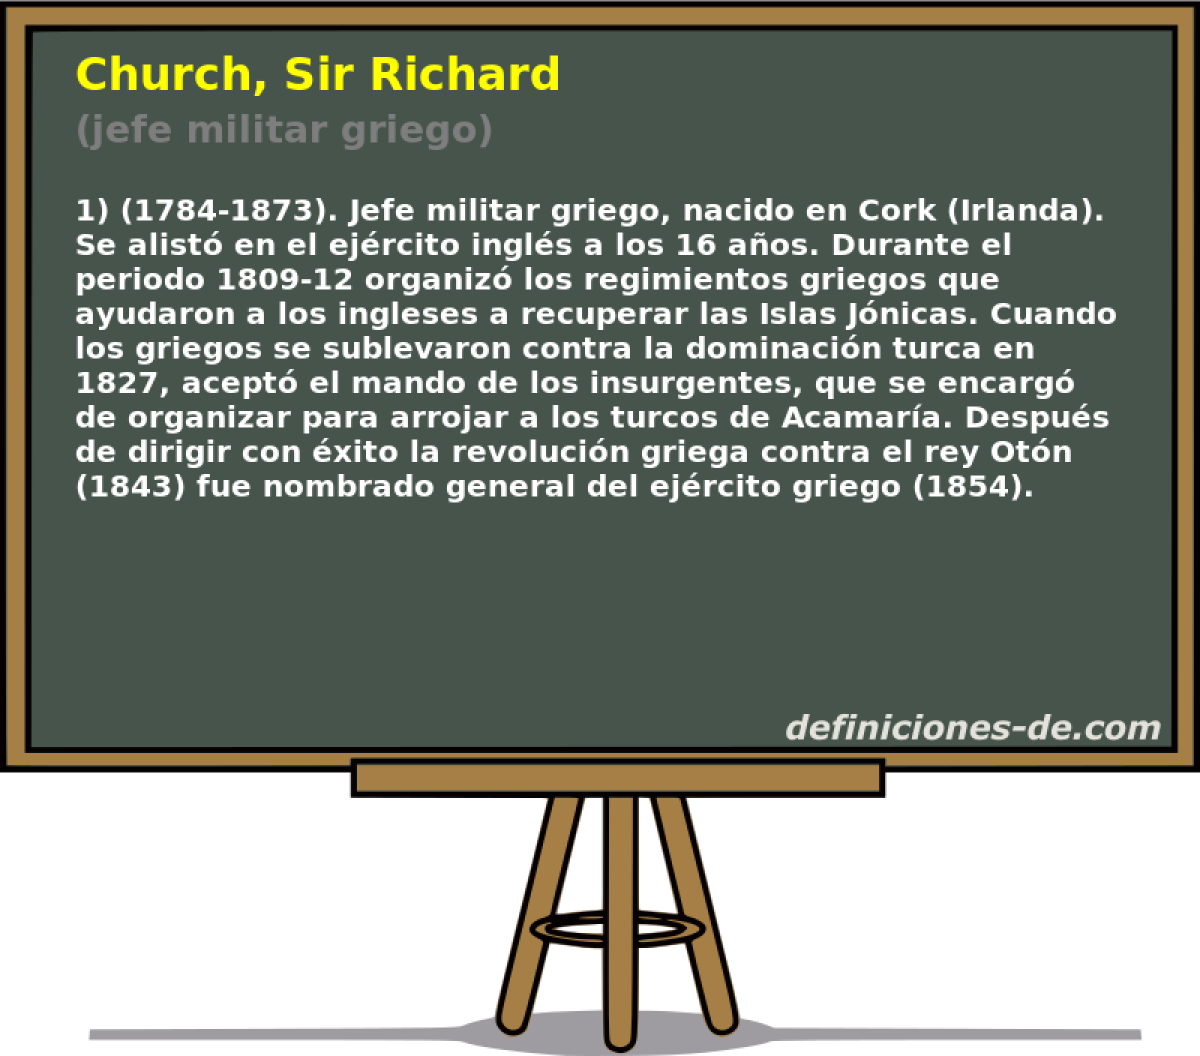 Church, Sir Richard (jefe militar griego)